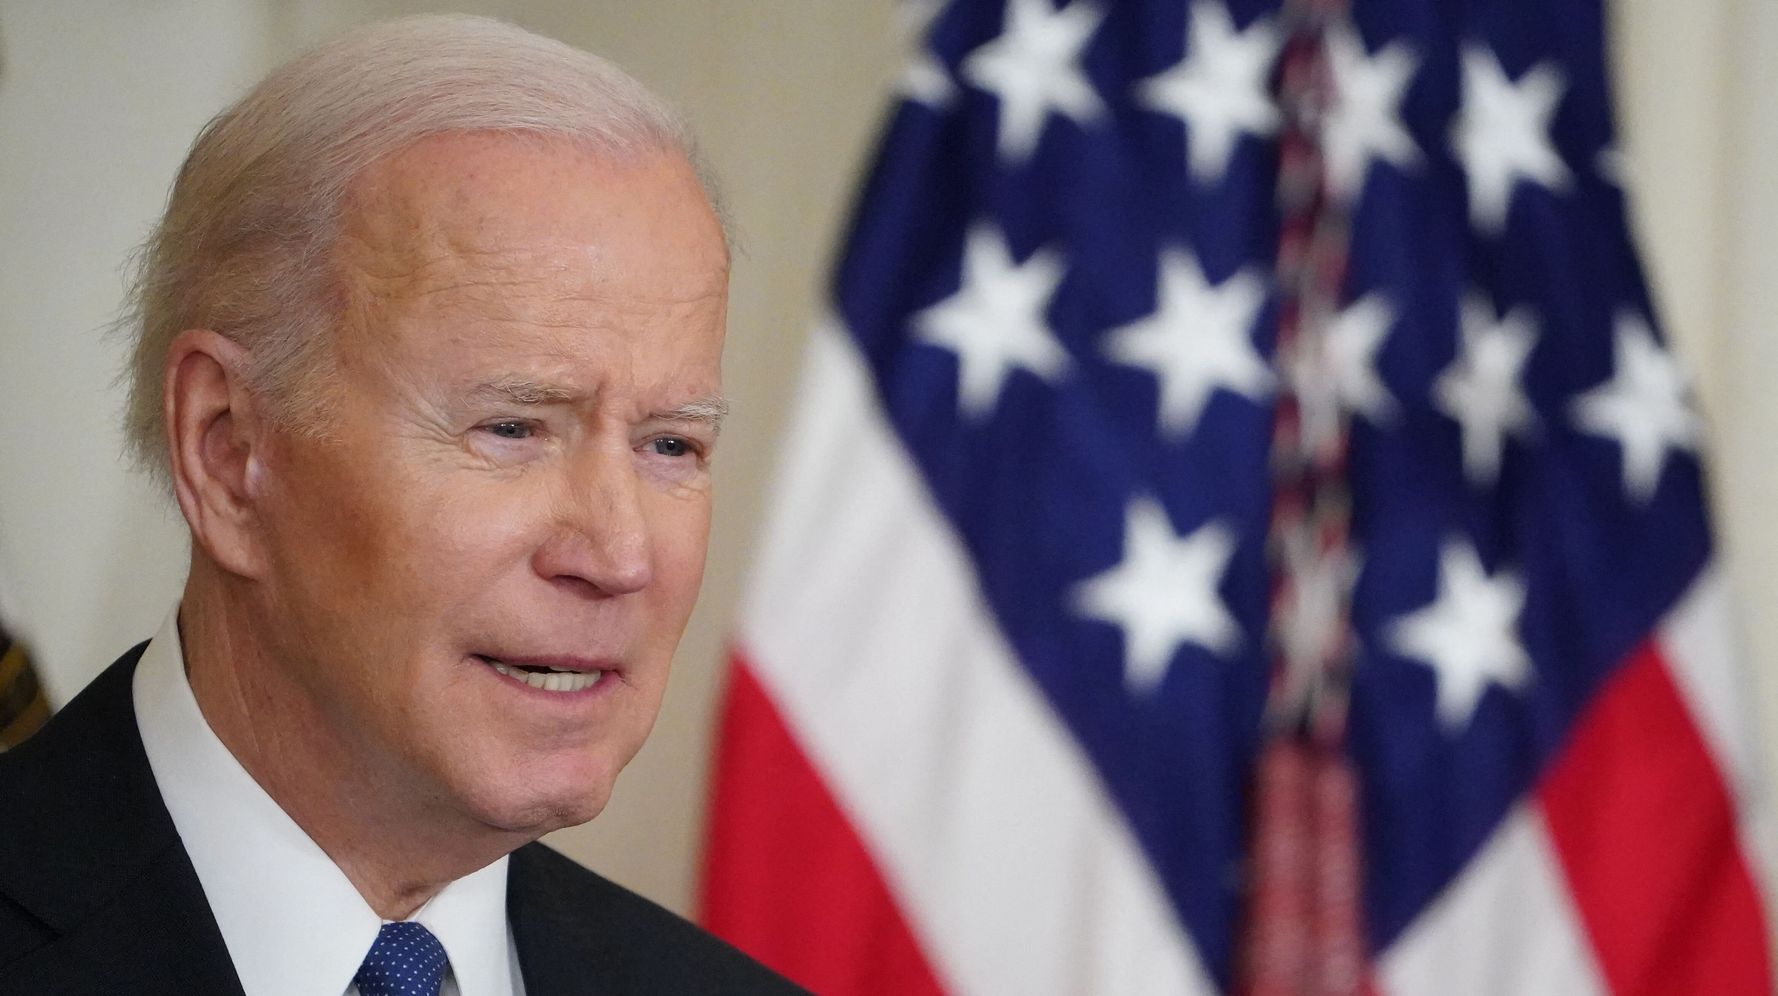 Joe Biden To Extend Student Loan Moratorium Through August: Reports